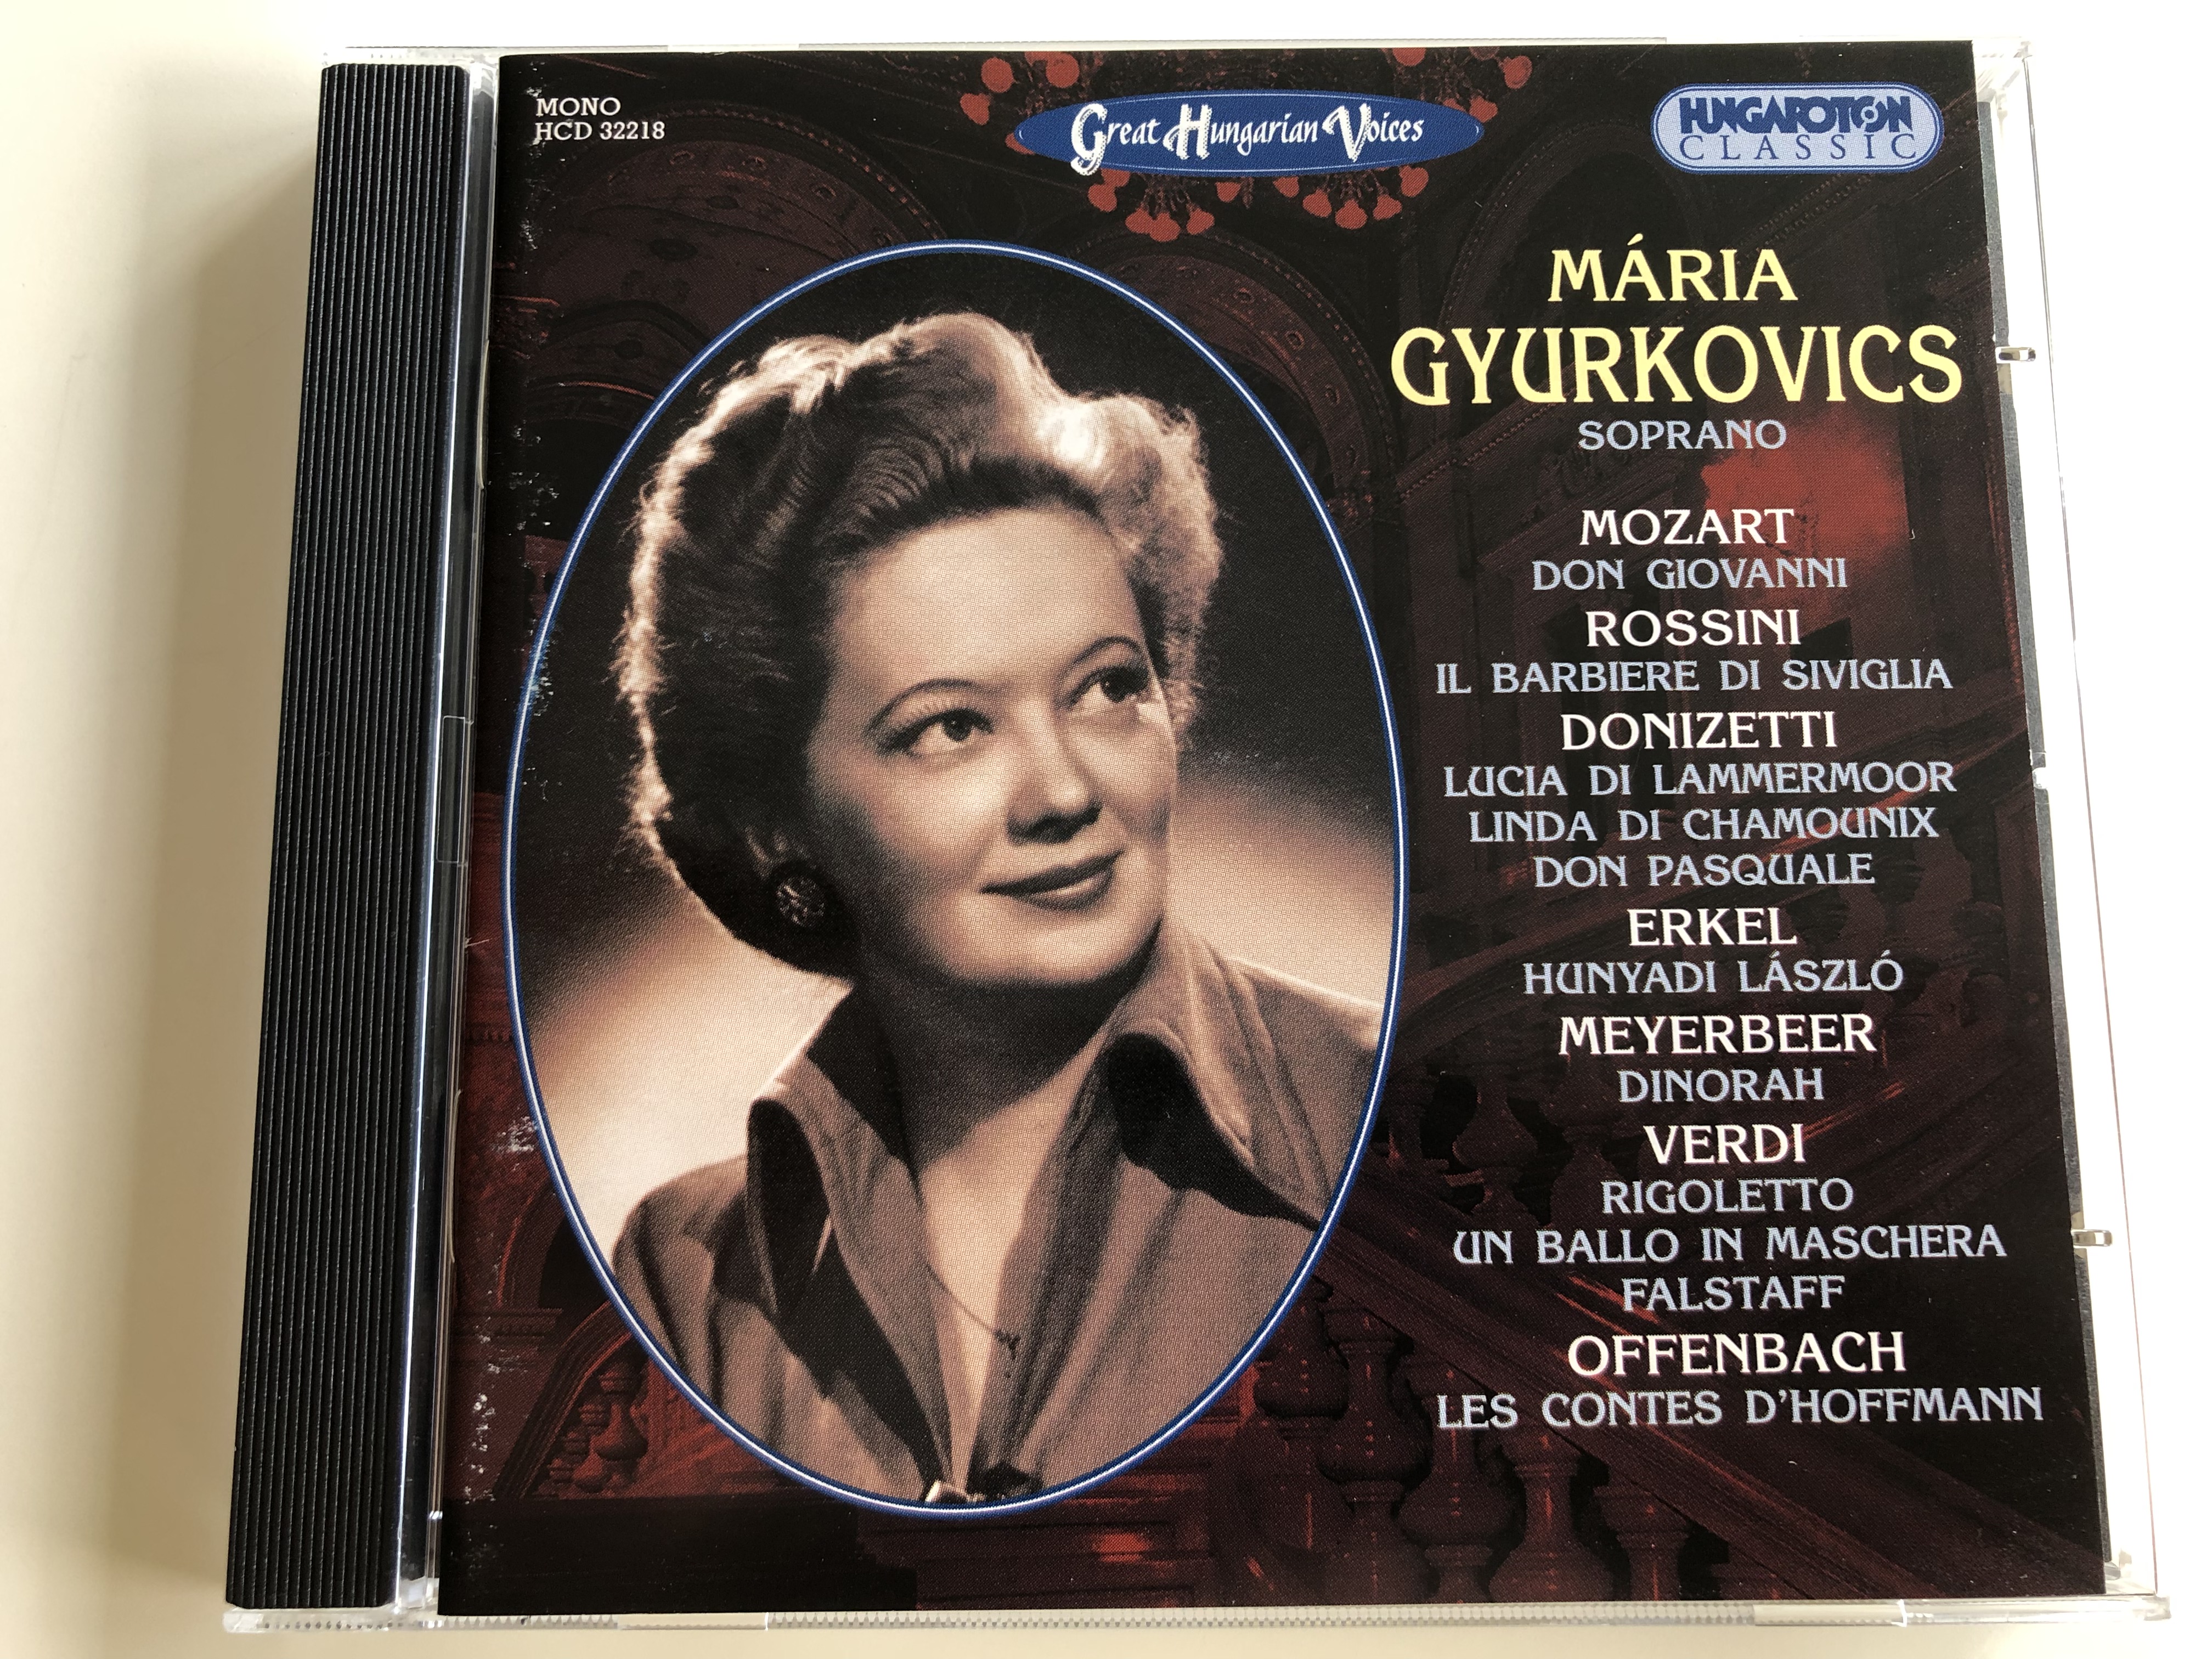 m-ria-gyurkovics-soprano-great-hungarian-voices-audio-cd-2003-mozart-rossini-donizetti-erkel-meyerbeer-verdi-offenbach-hungaroton-classic-hcd-32218-1-.jpg